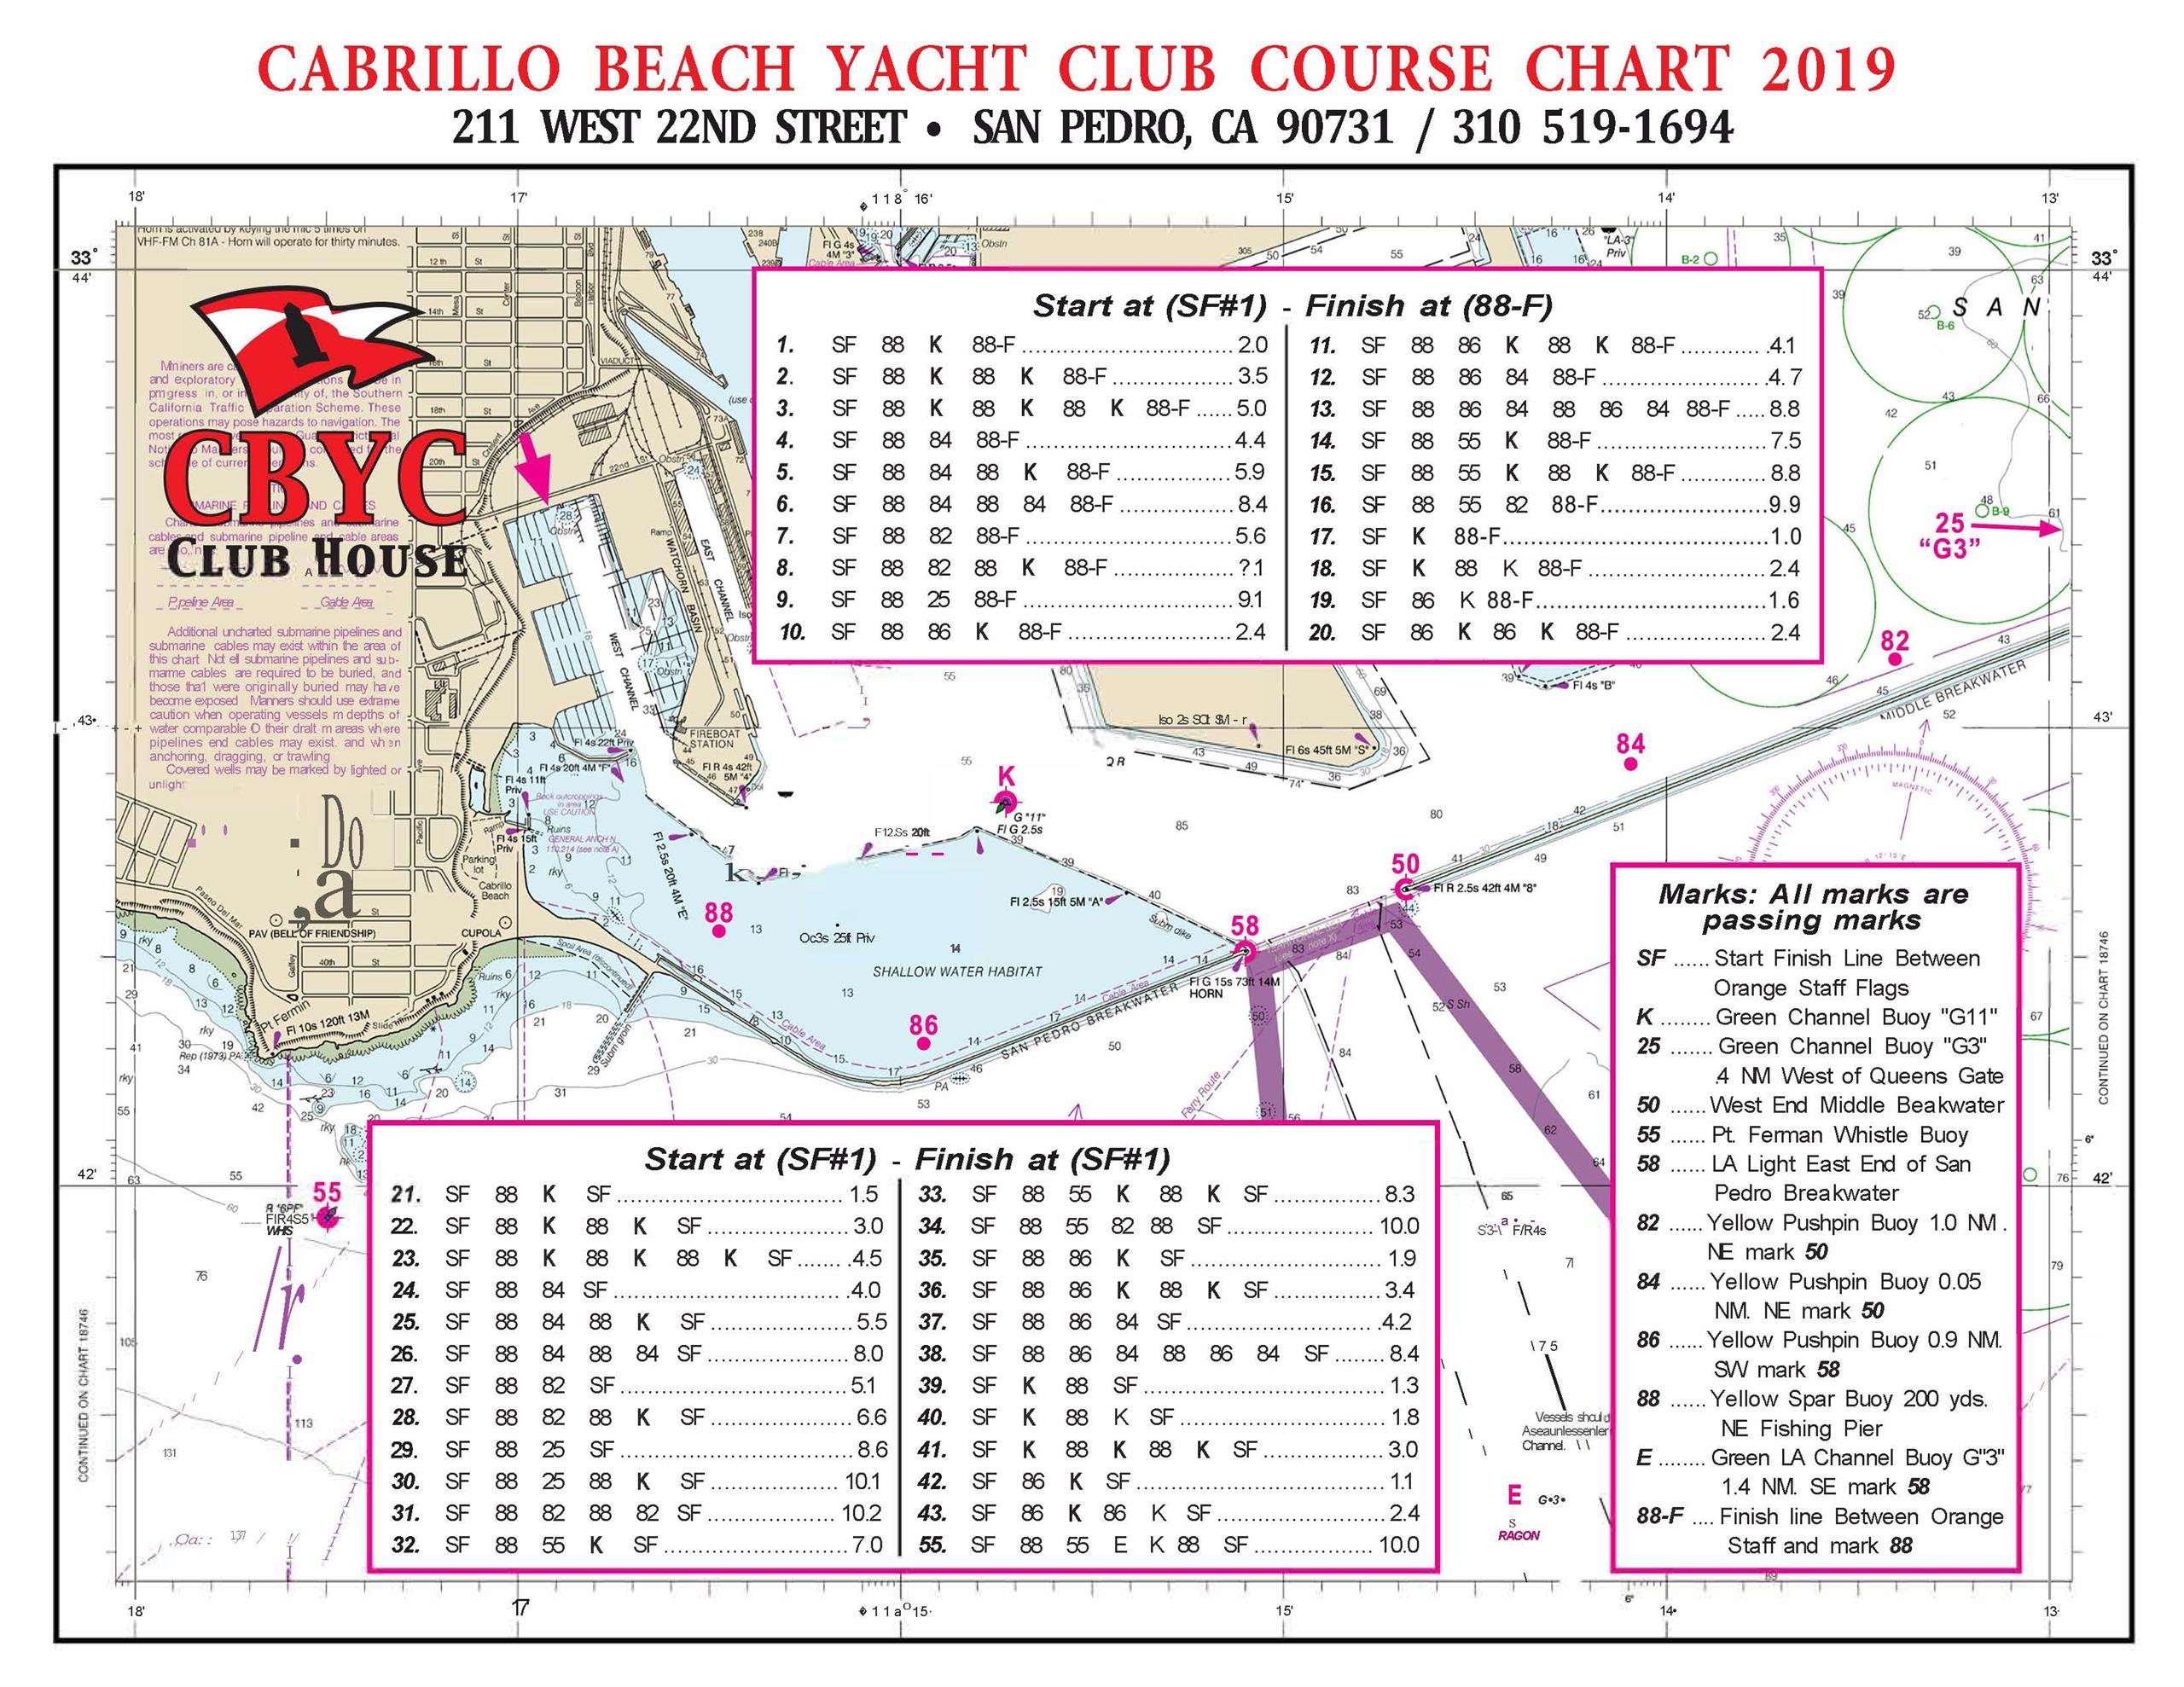 Cabrillo Yacht Club Course Chart